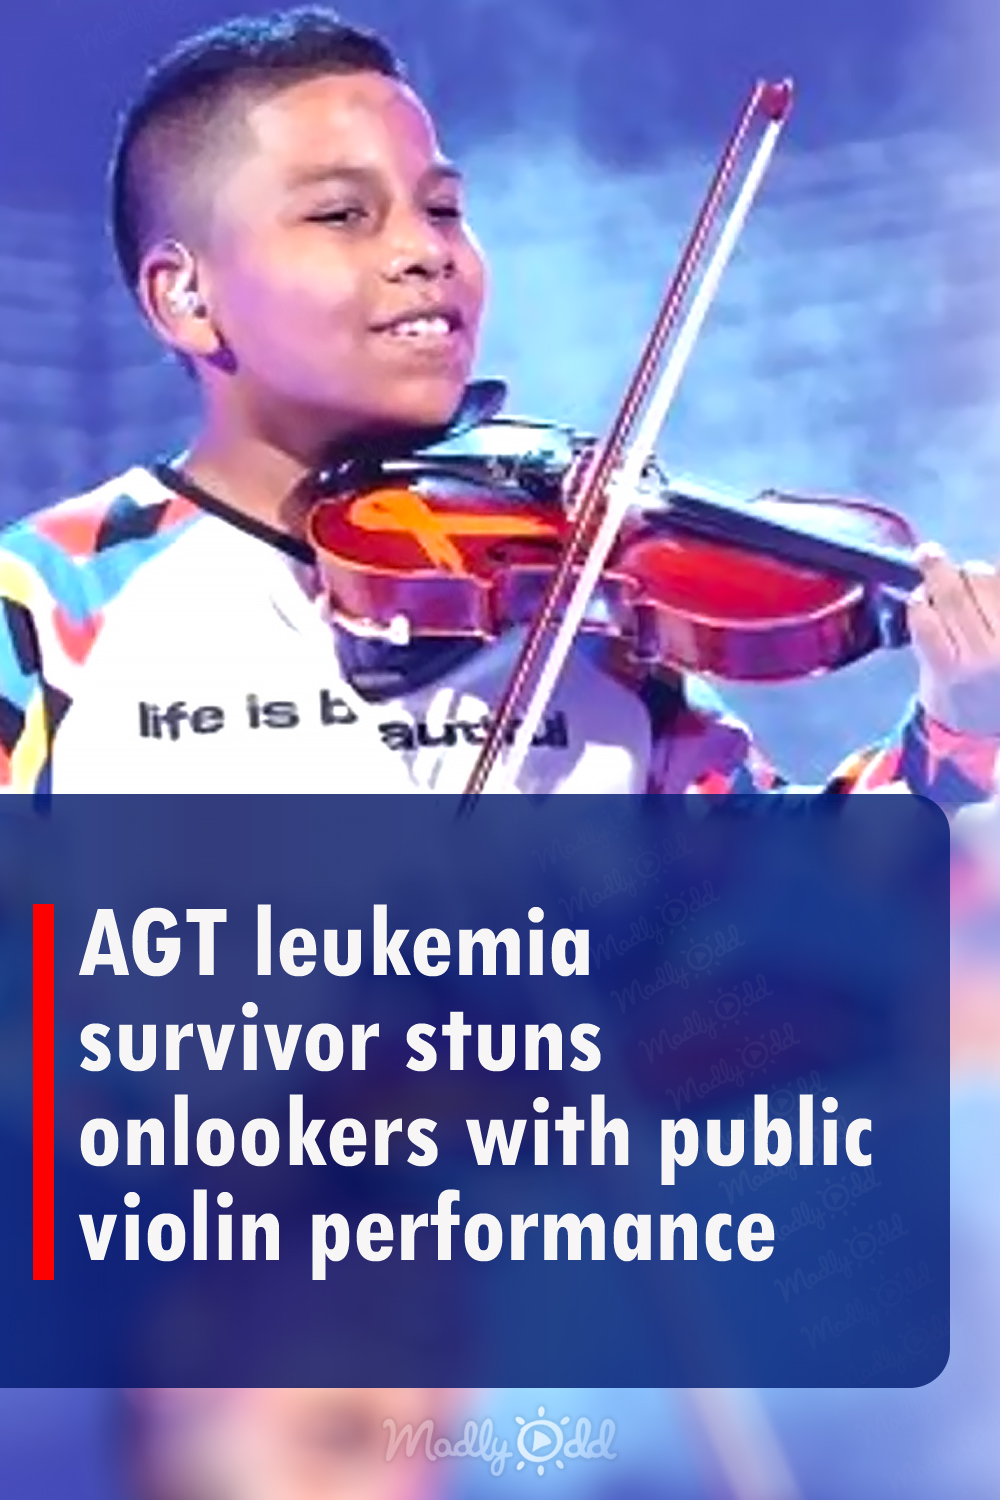 AGT leukemia survivor stuns onlookers with public violin performance